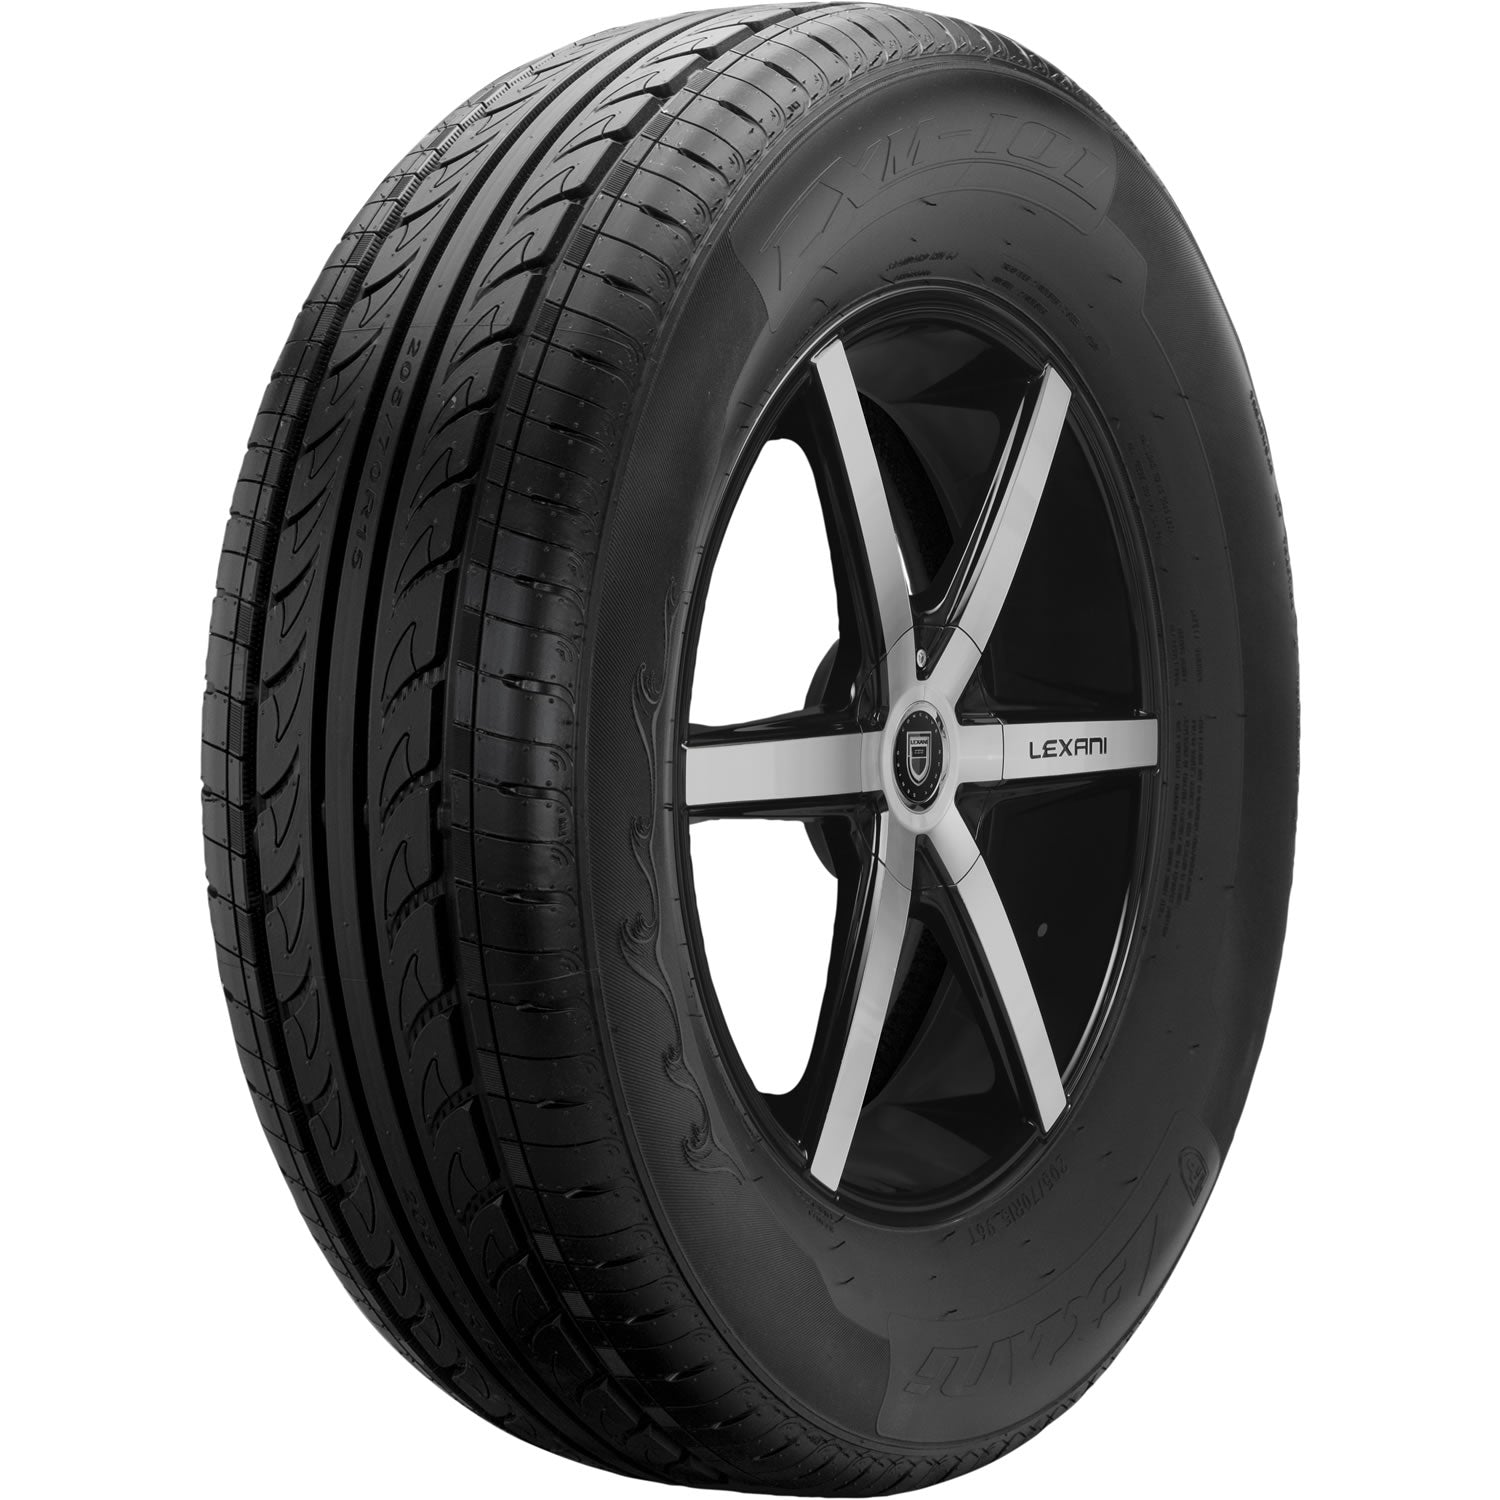 LEXANI LXM-101 205/70R15 (26.3X8.2R 15) Tires